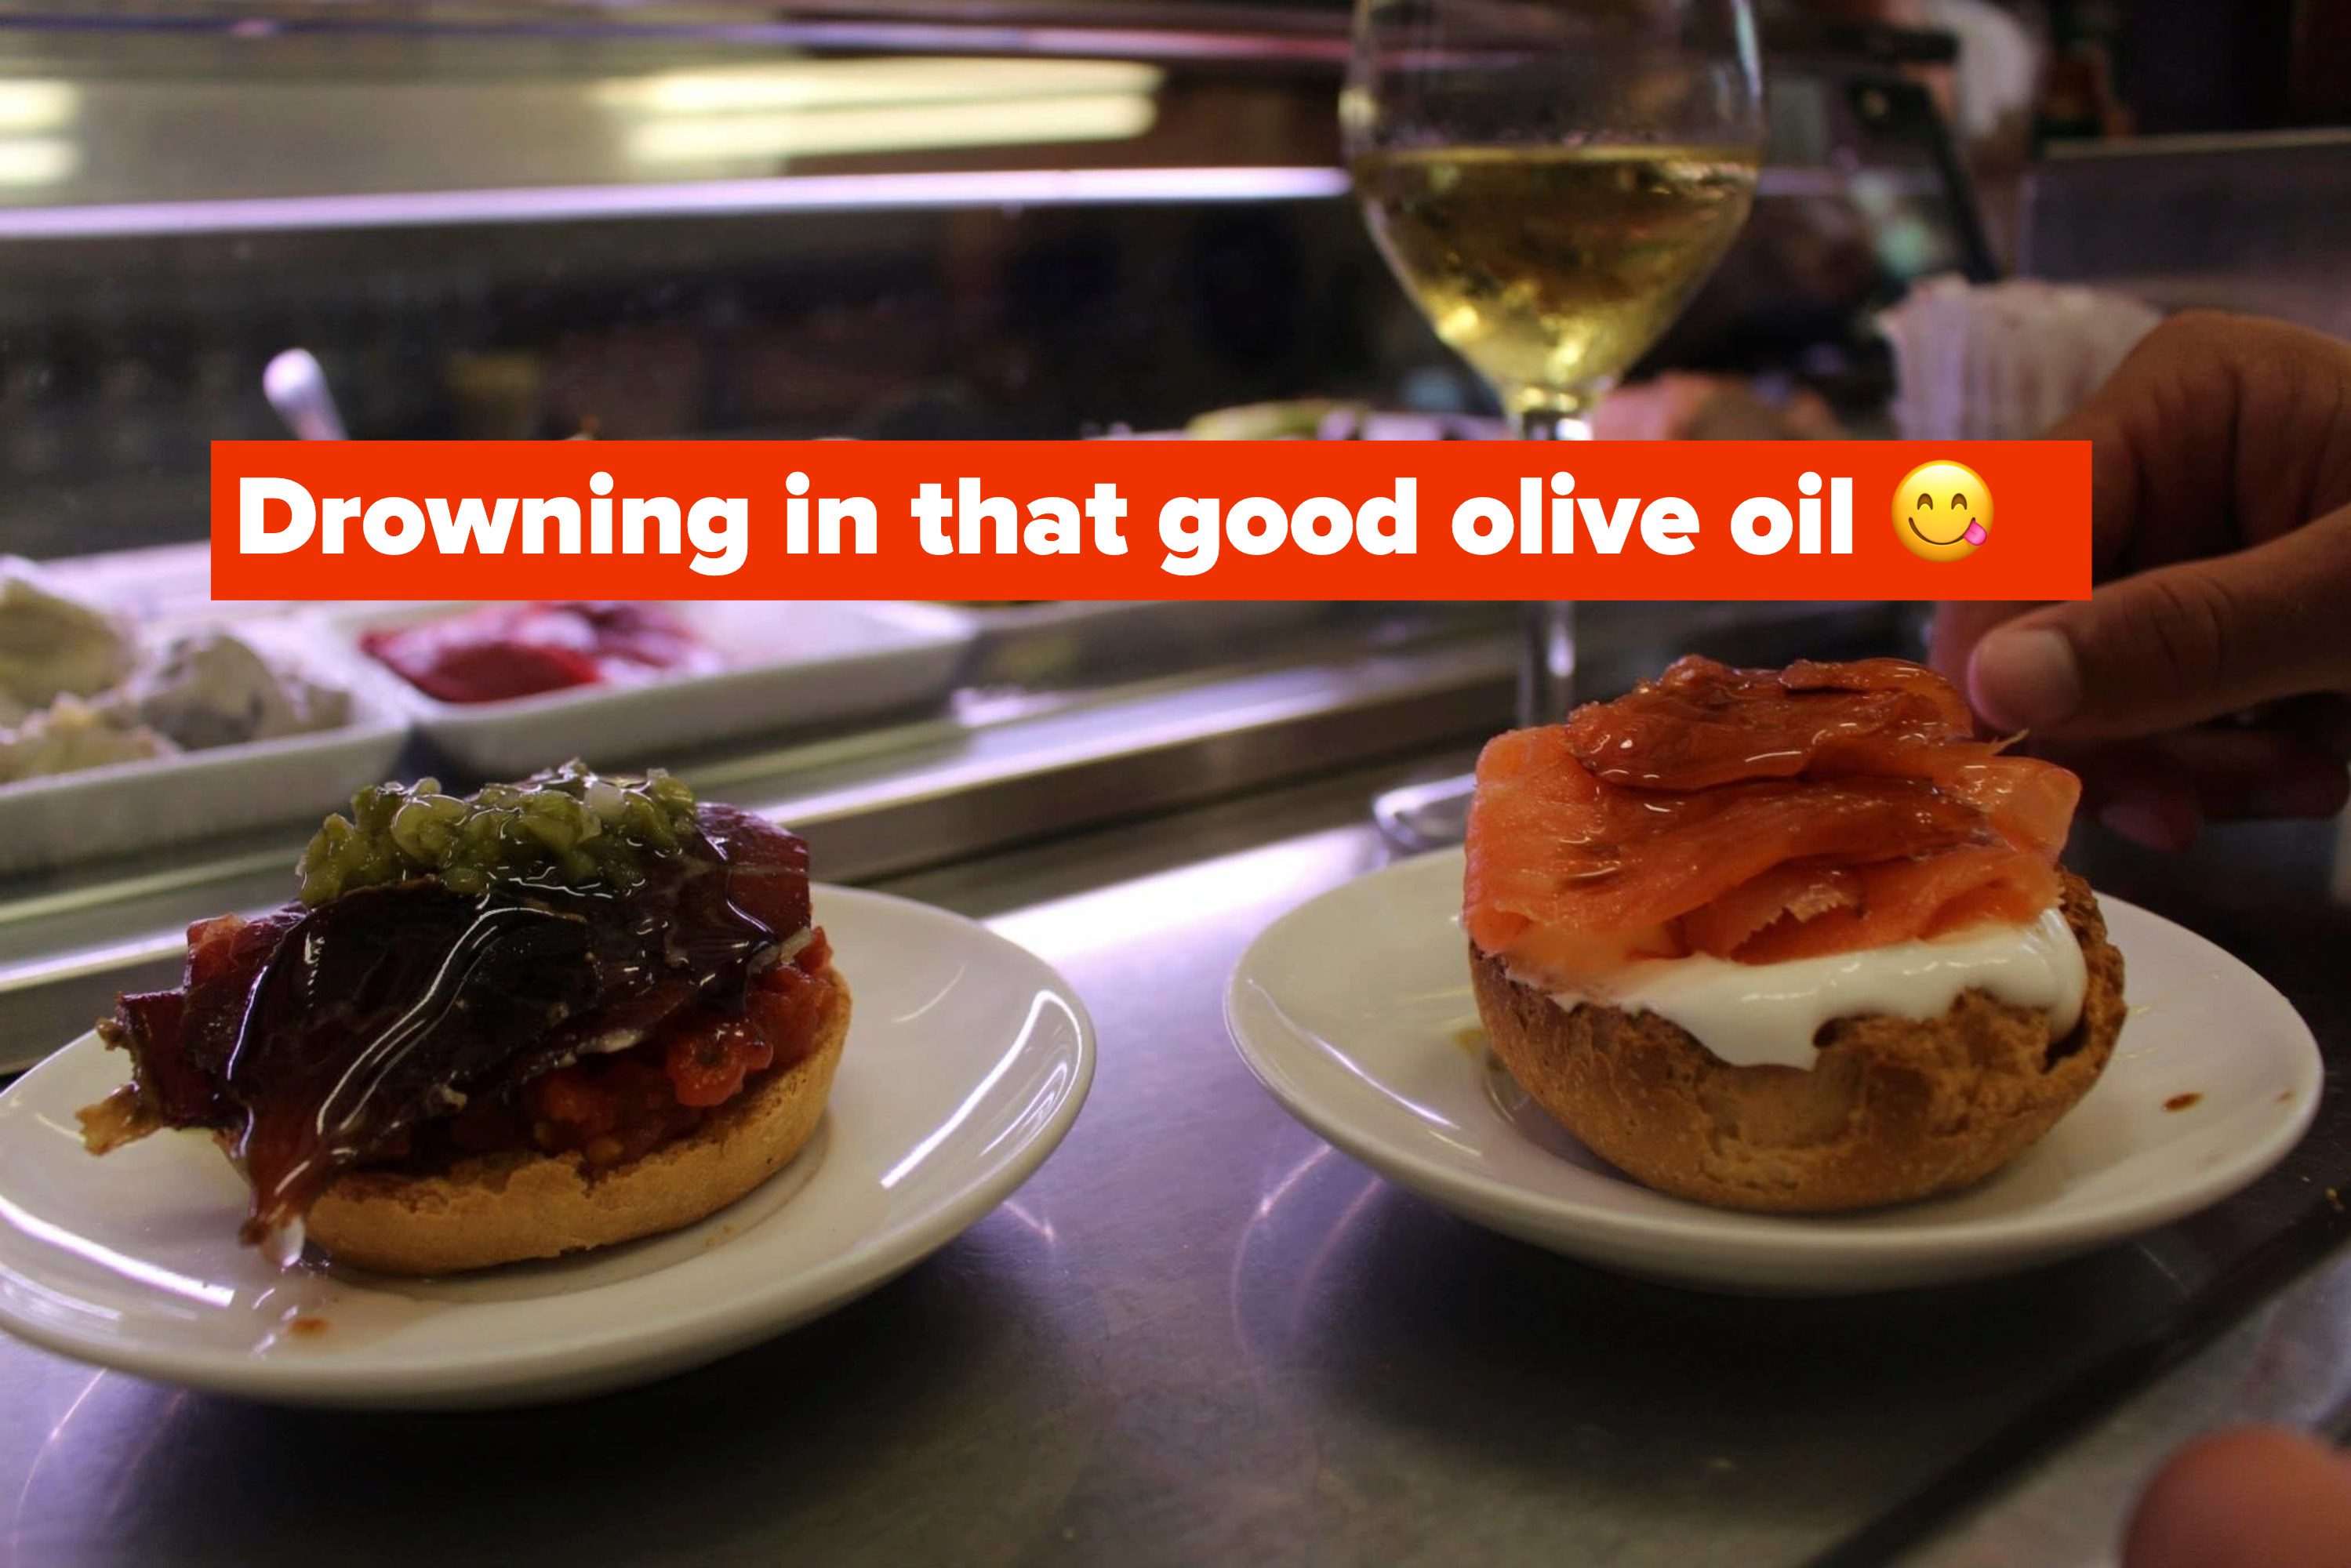 Tapas covered in olive oil.